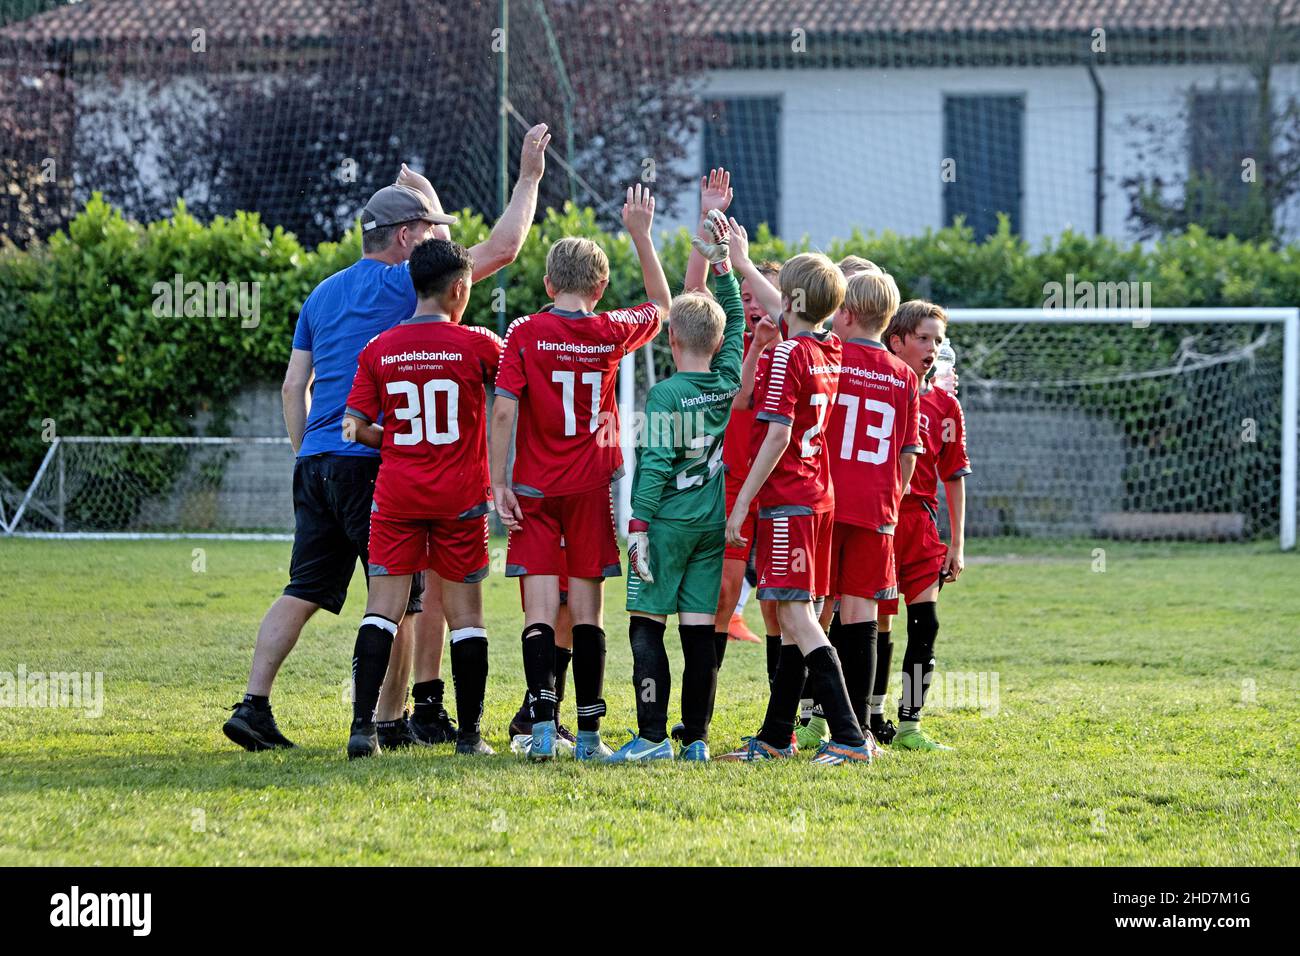 Jóvenes futbolistas celebrando Foto de stock